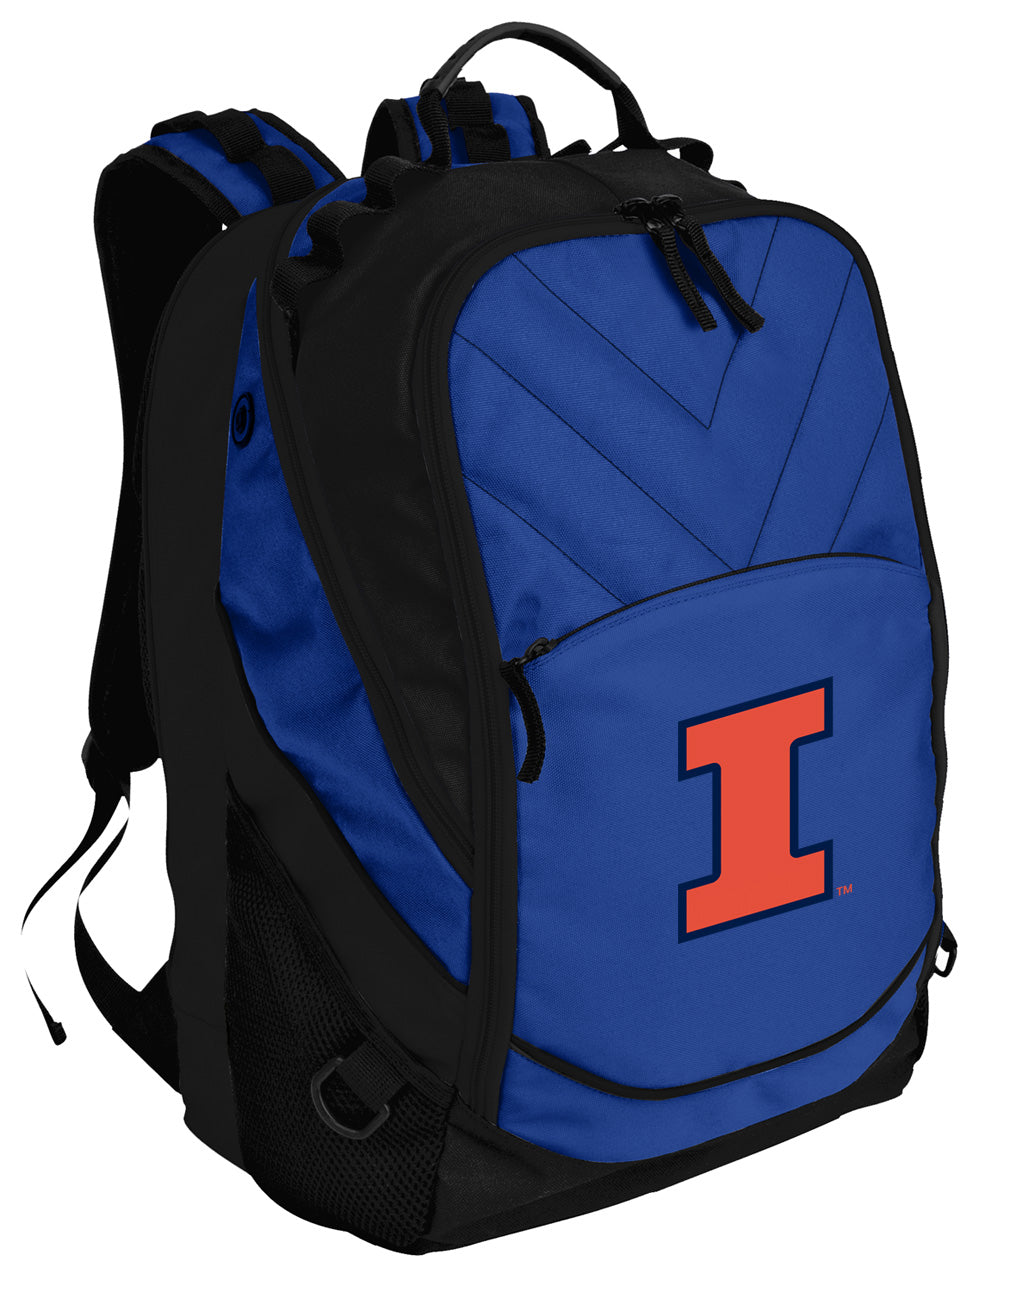 University of Illinois Backpack Illini Laptop Computer Backpack